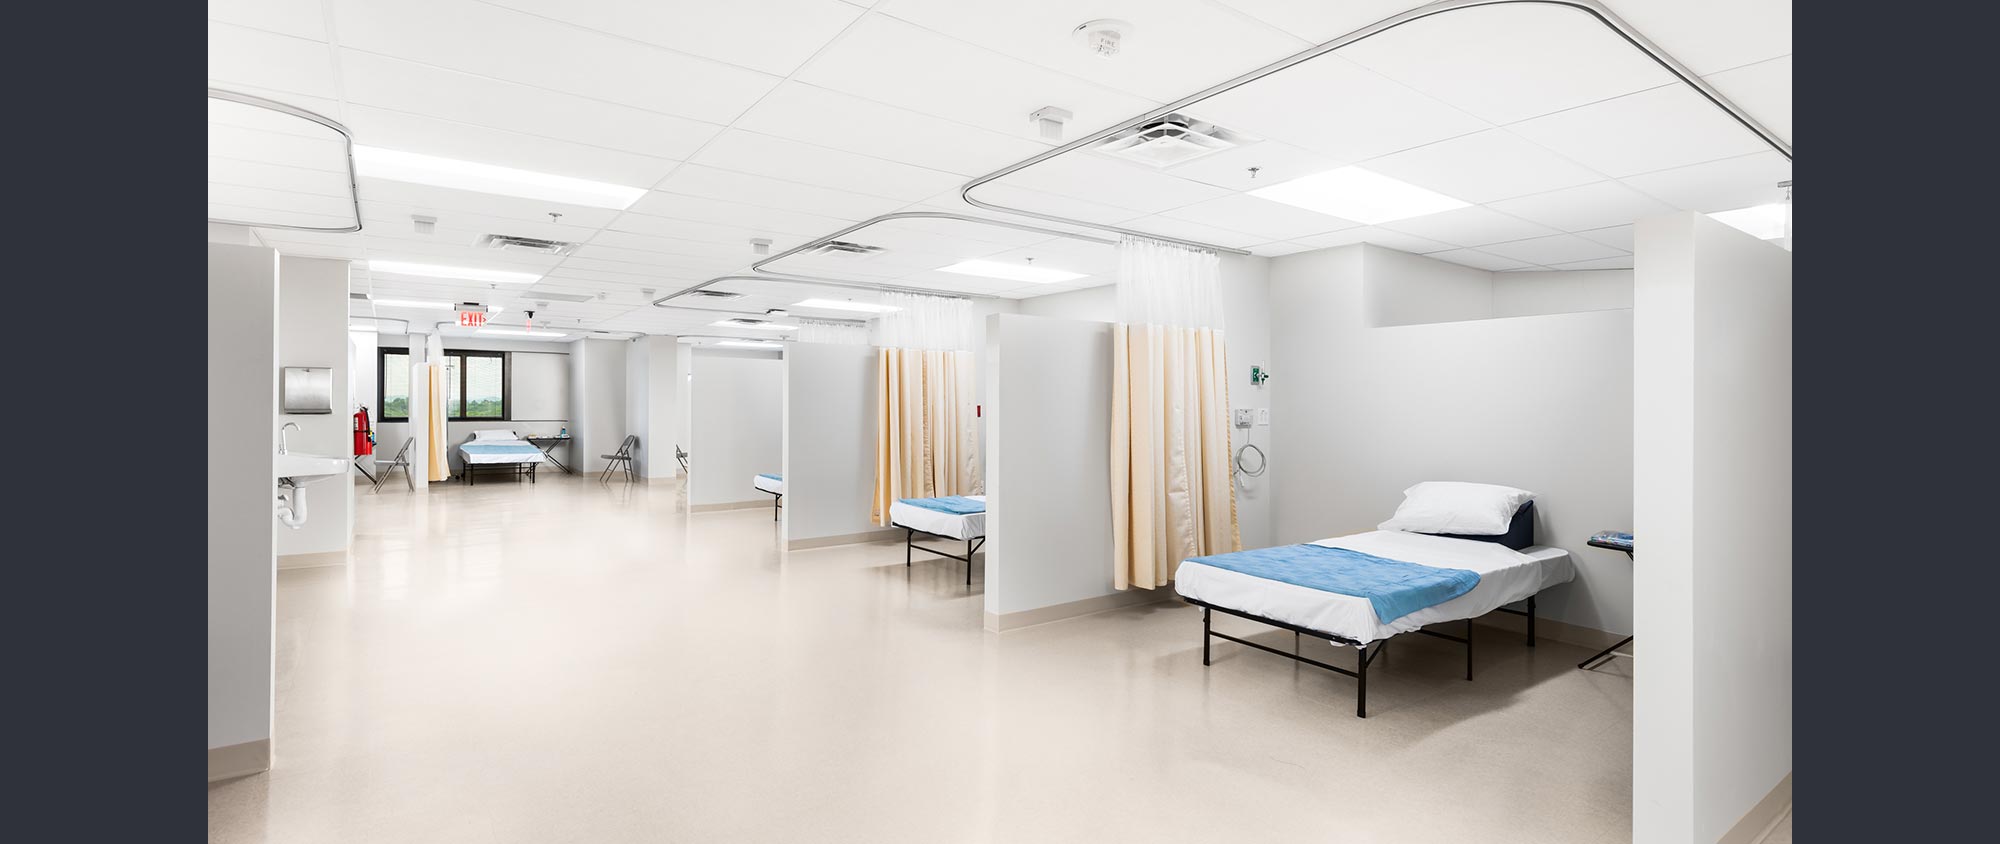 Nashville General Hospital at Meharry – COVID Unit Conversion